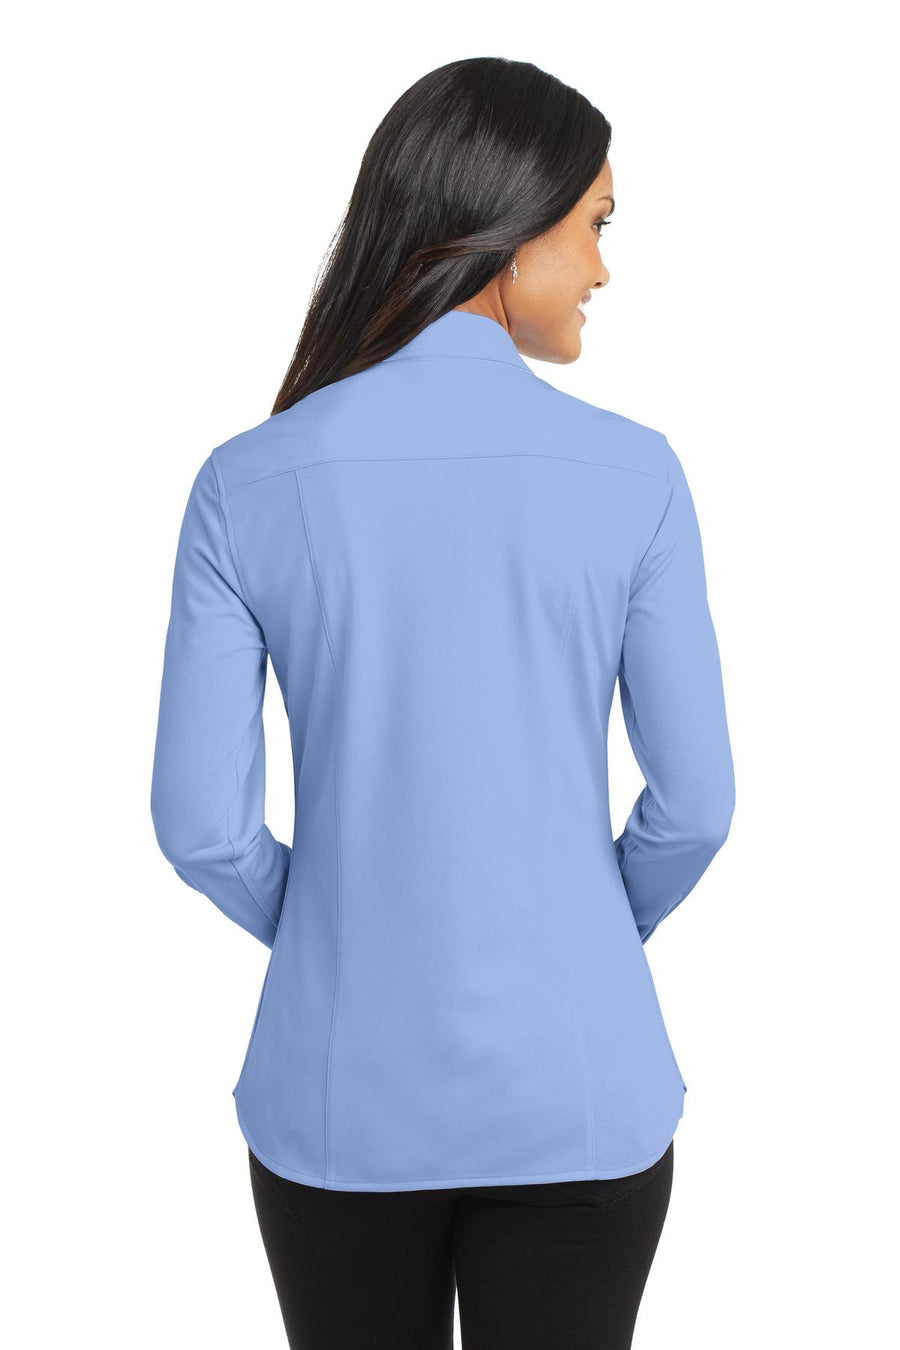 L570-Dress Shirt Blue-back_model